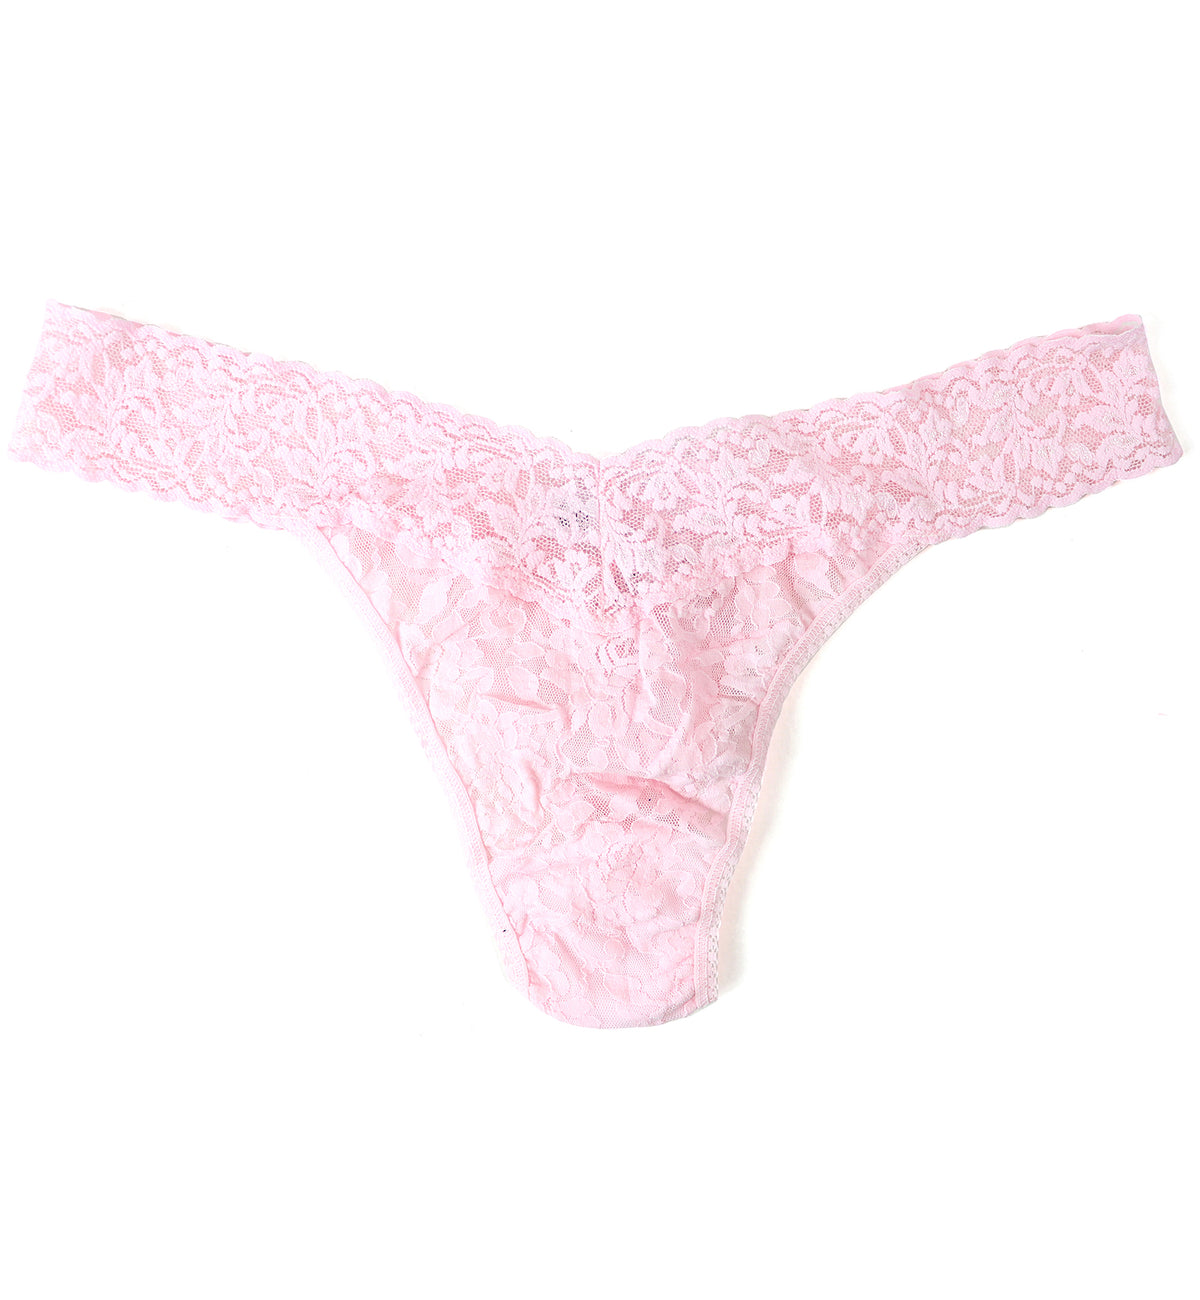 Hanky Panky Signature Lace Original Rise Thong PLUS (4811X),Bliss Pink - Bliss Pink,Plus Size